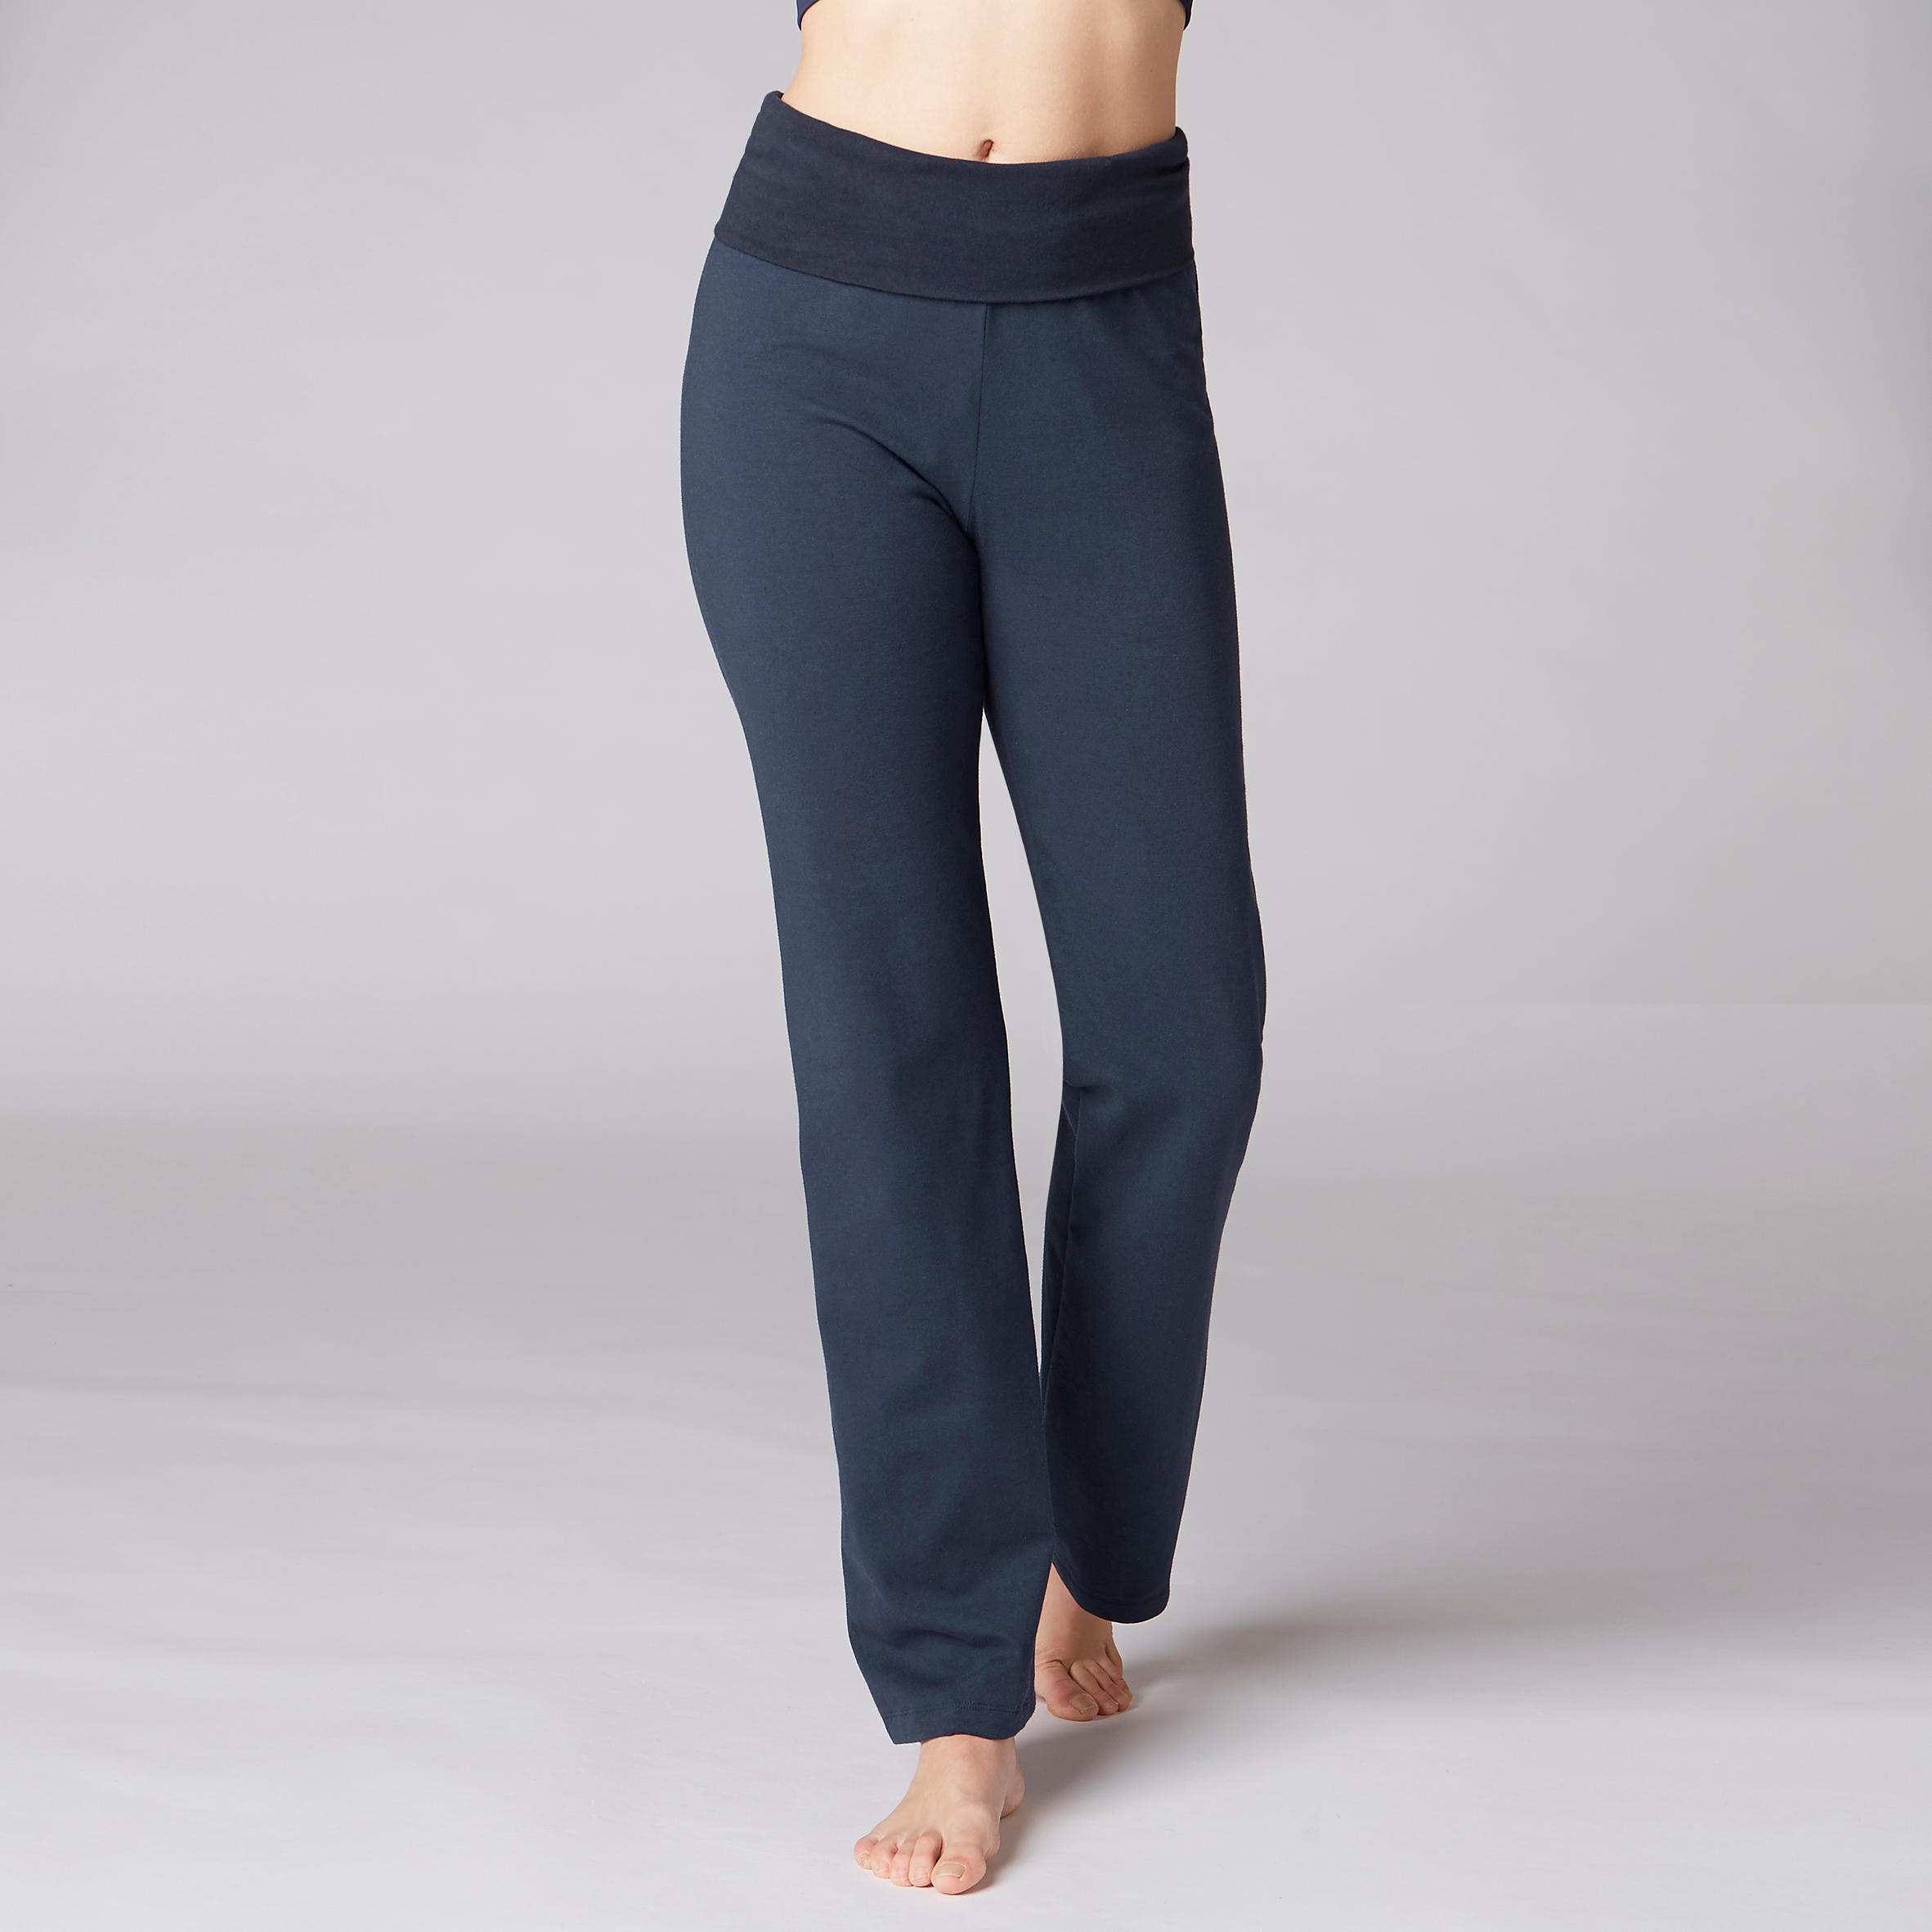 Stretch Striped Short Pants KLGDA Premium Soft Knit Tights High Waist Yoga Pants 